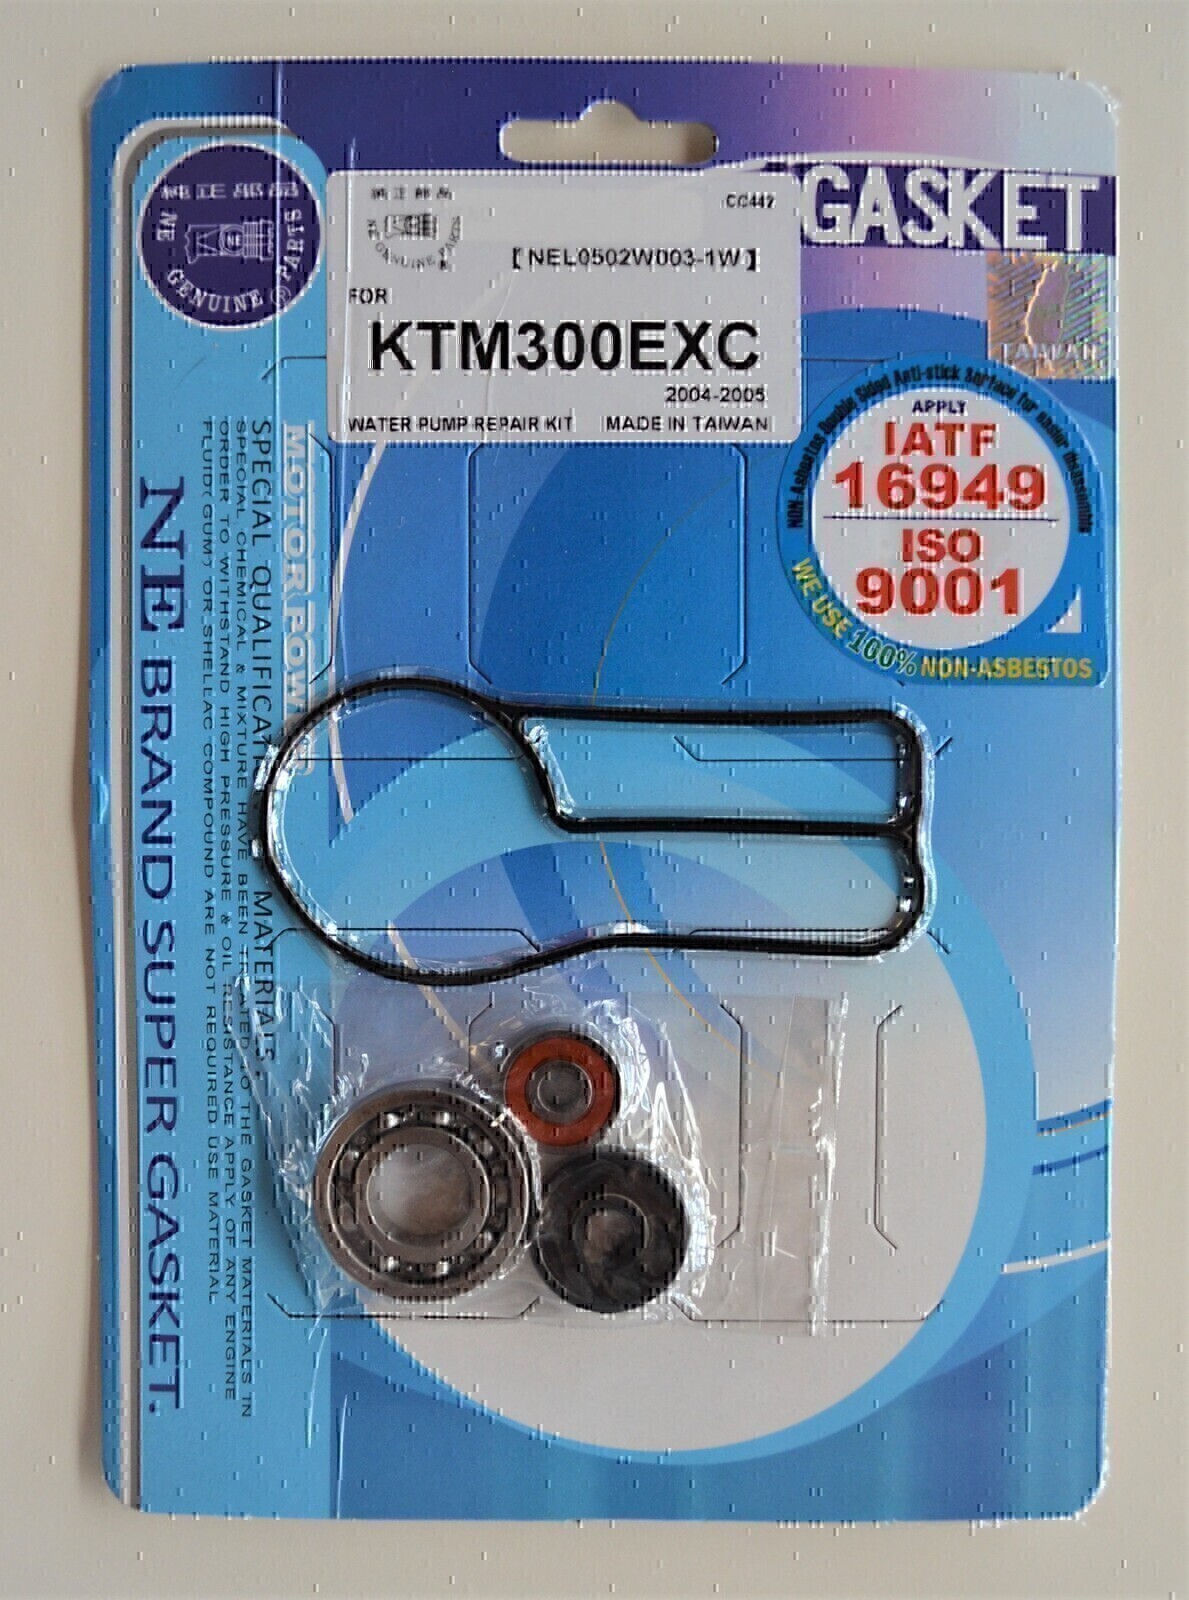 WATER PUMP REPAIR KIT FOR KTM 300EXC 2004 - 2005 300EXC 2009 300MXC/250EXC 2004 - 2005 250SX 2002 - 2016 250XC/250EXC 2006 - 2016